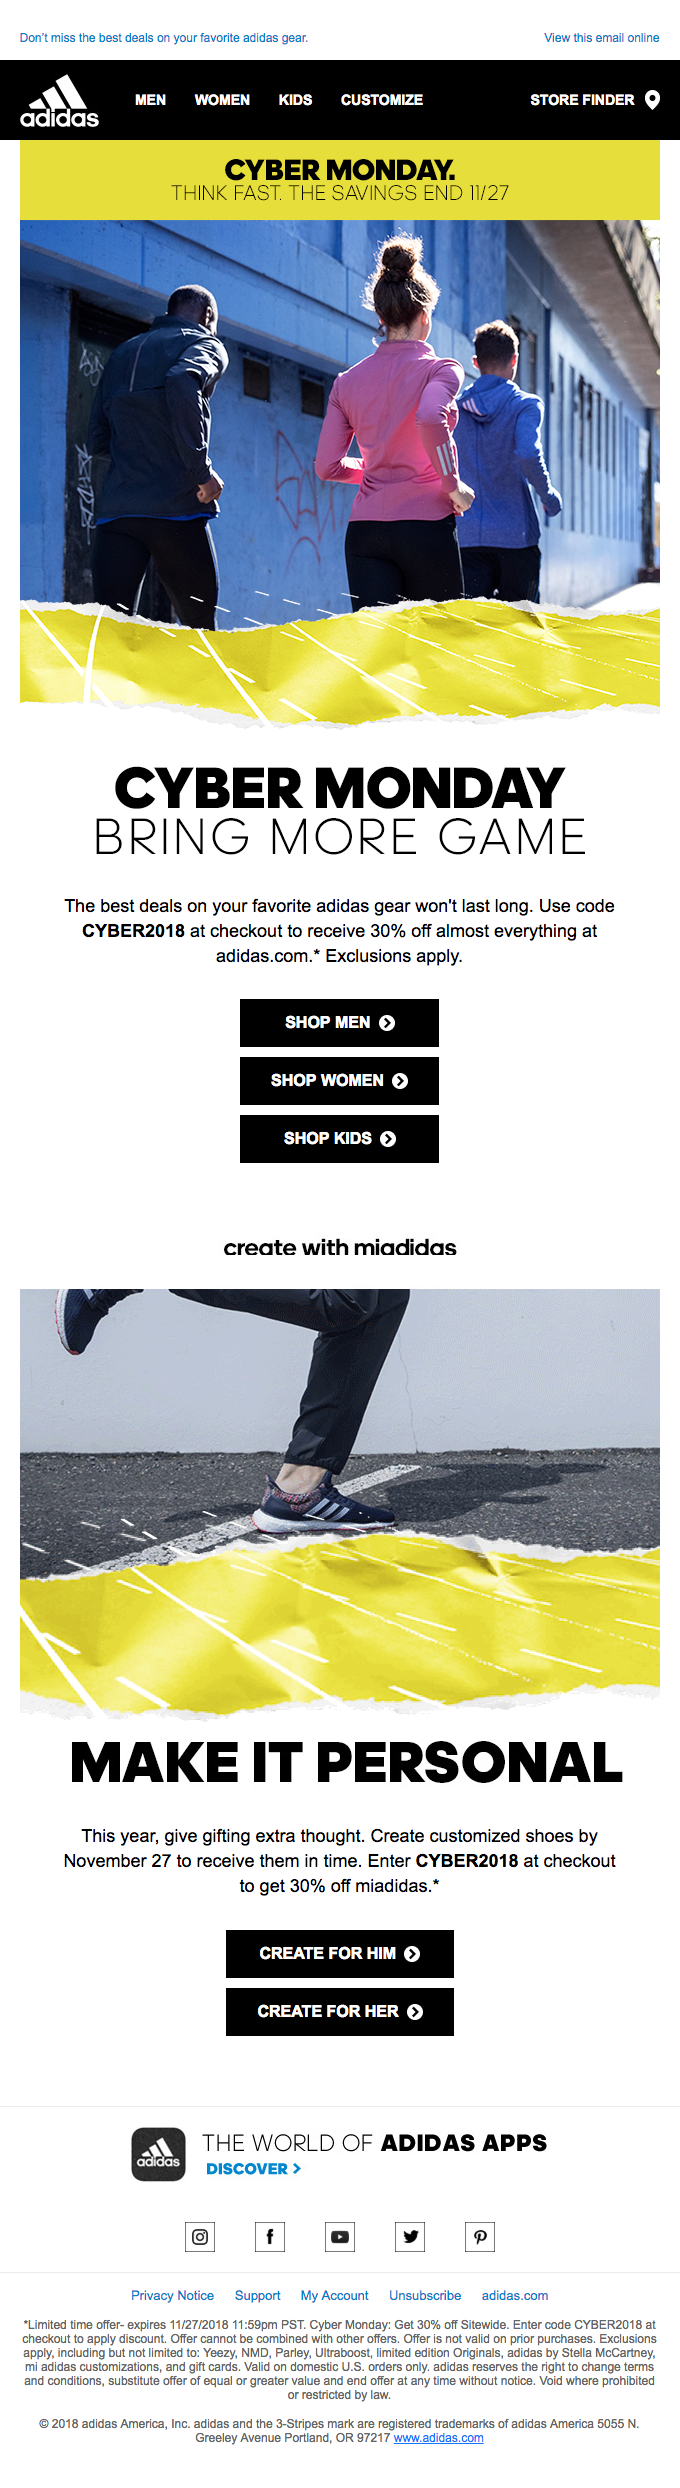 Adidas Cyber Monday Code Buy Adidas Shoes Online Recruitment Iustlive Com